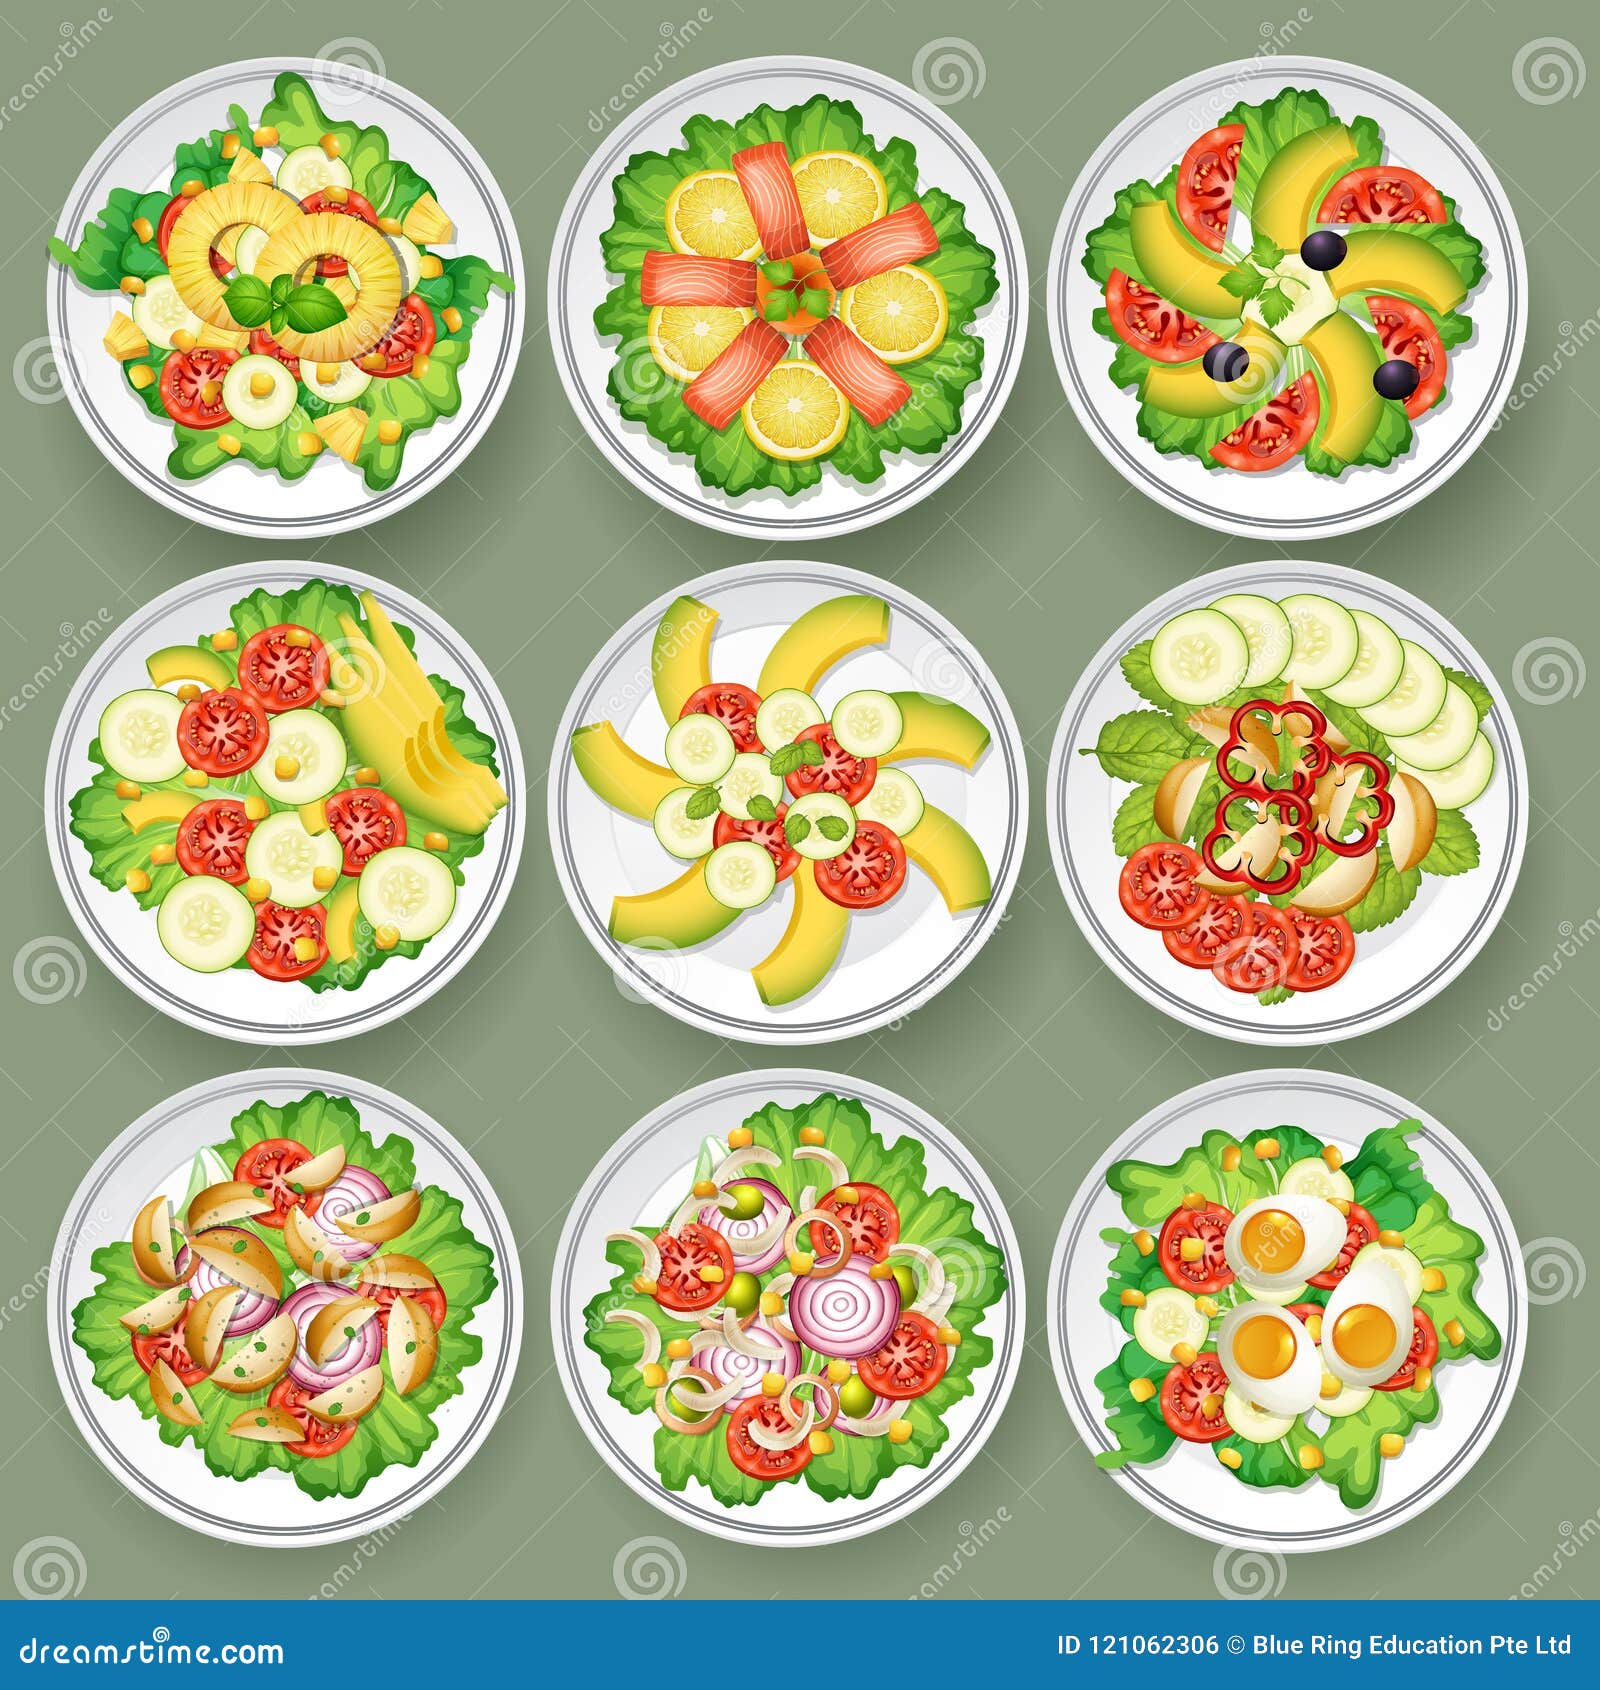 set of different salads